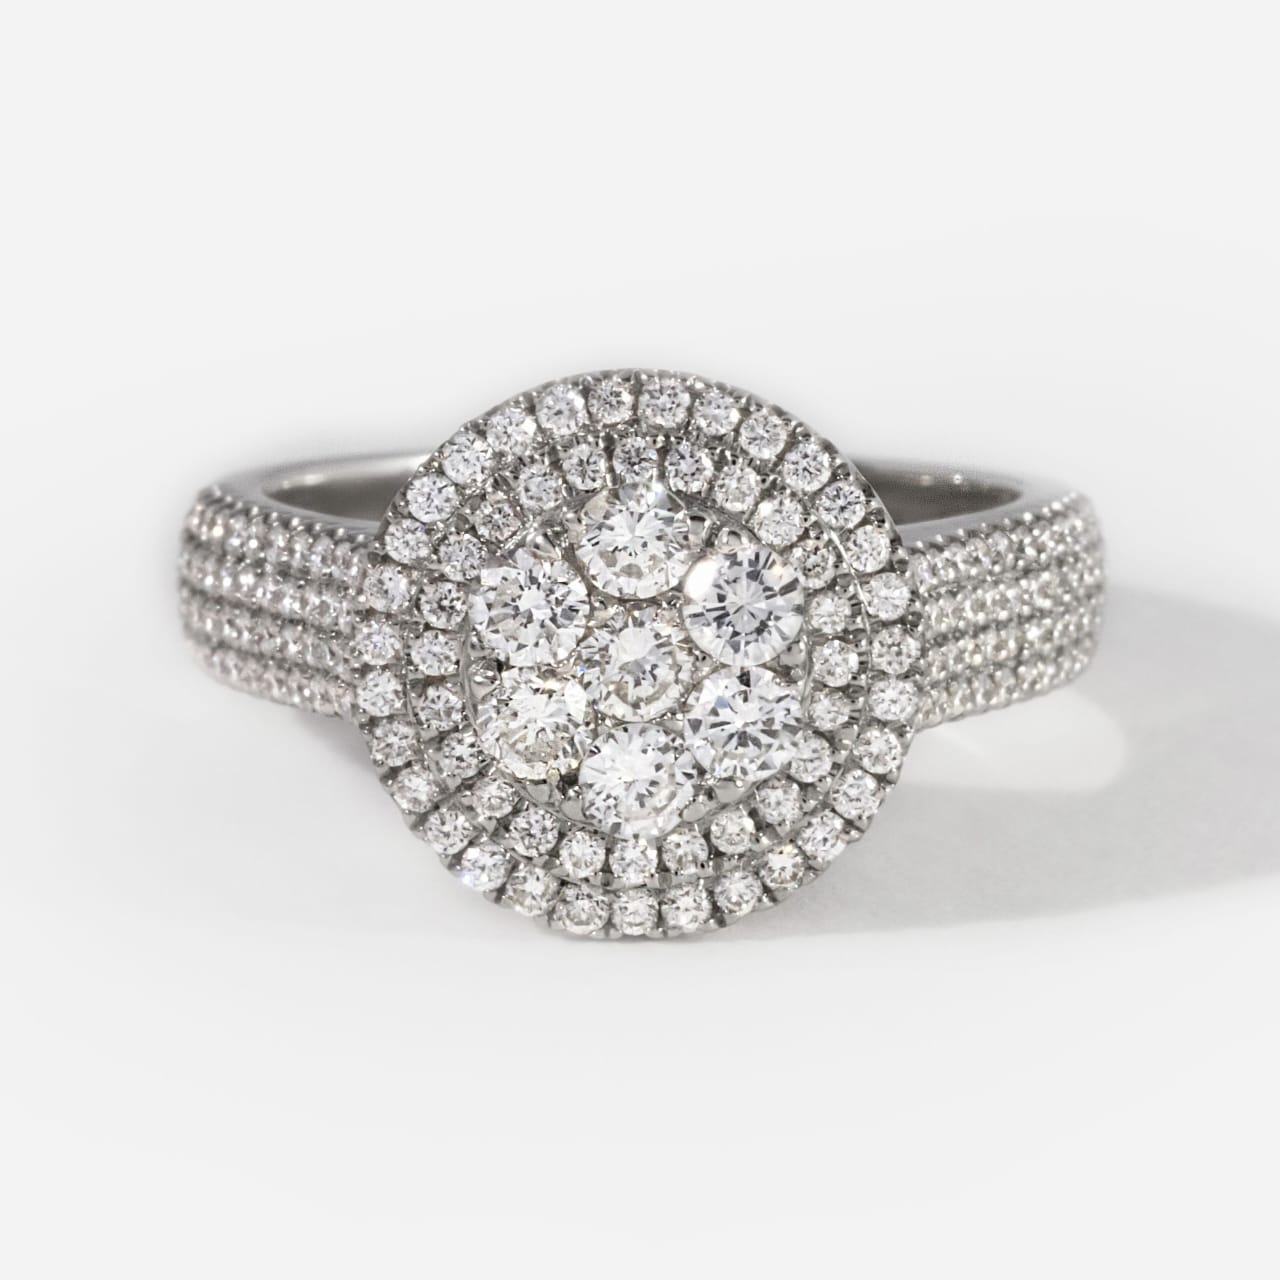 10 Carat Diamond Engagement Ring